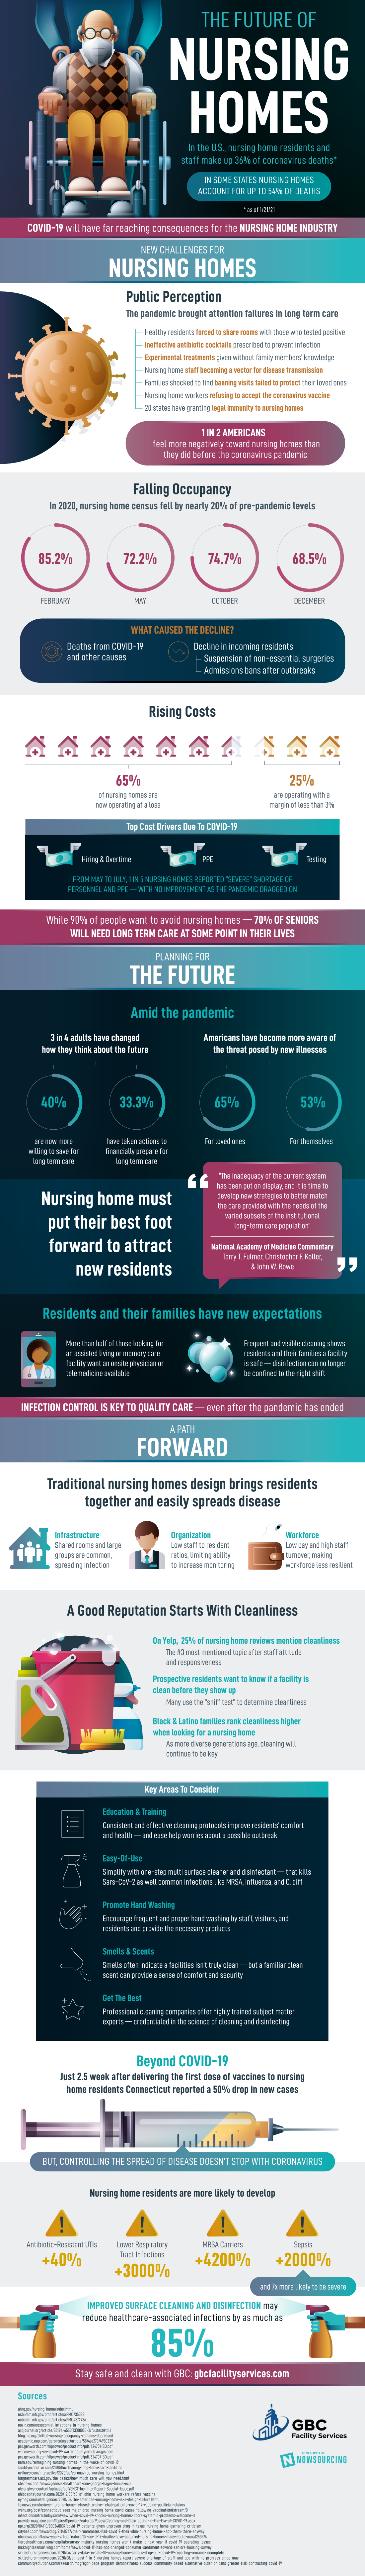 future of nursing homes